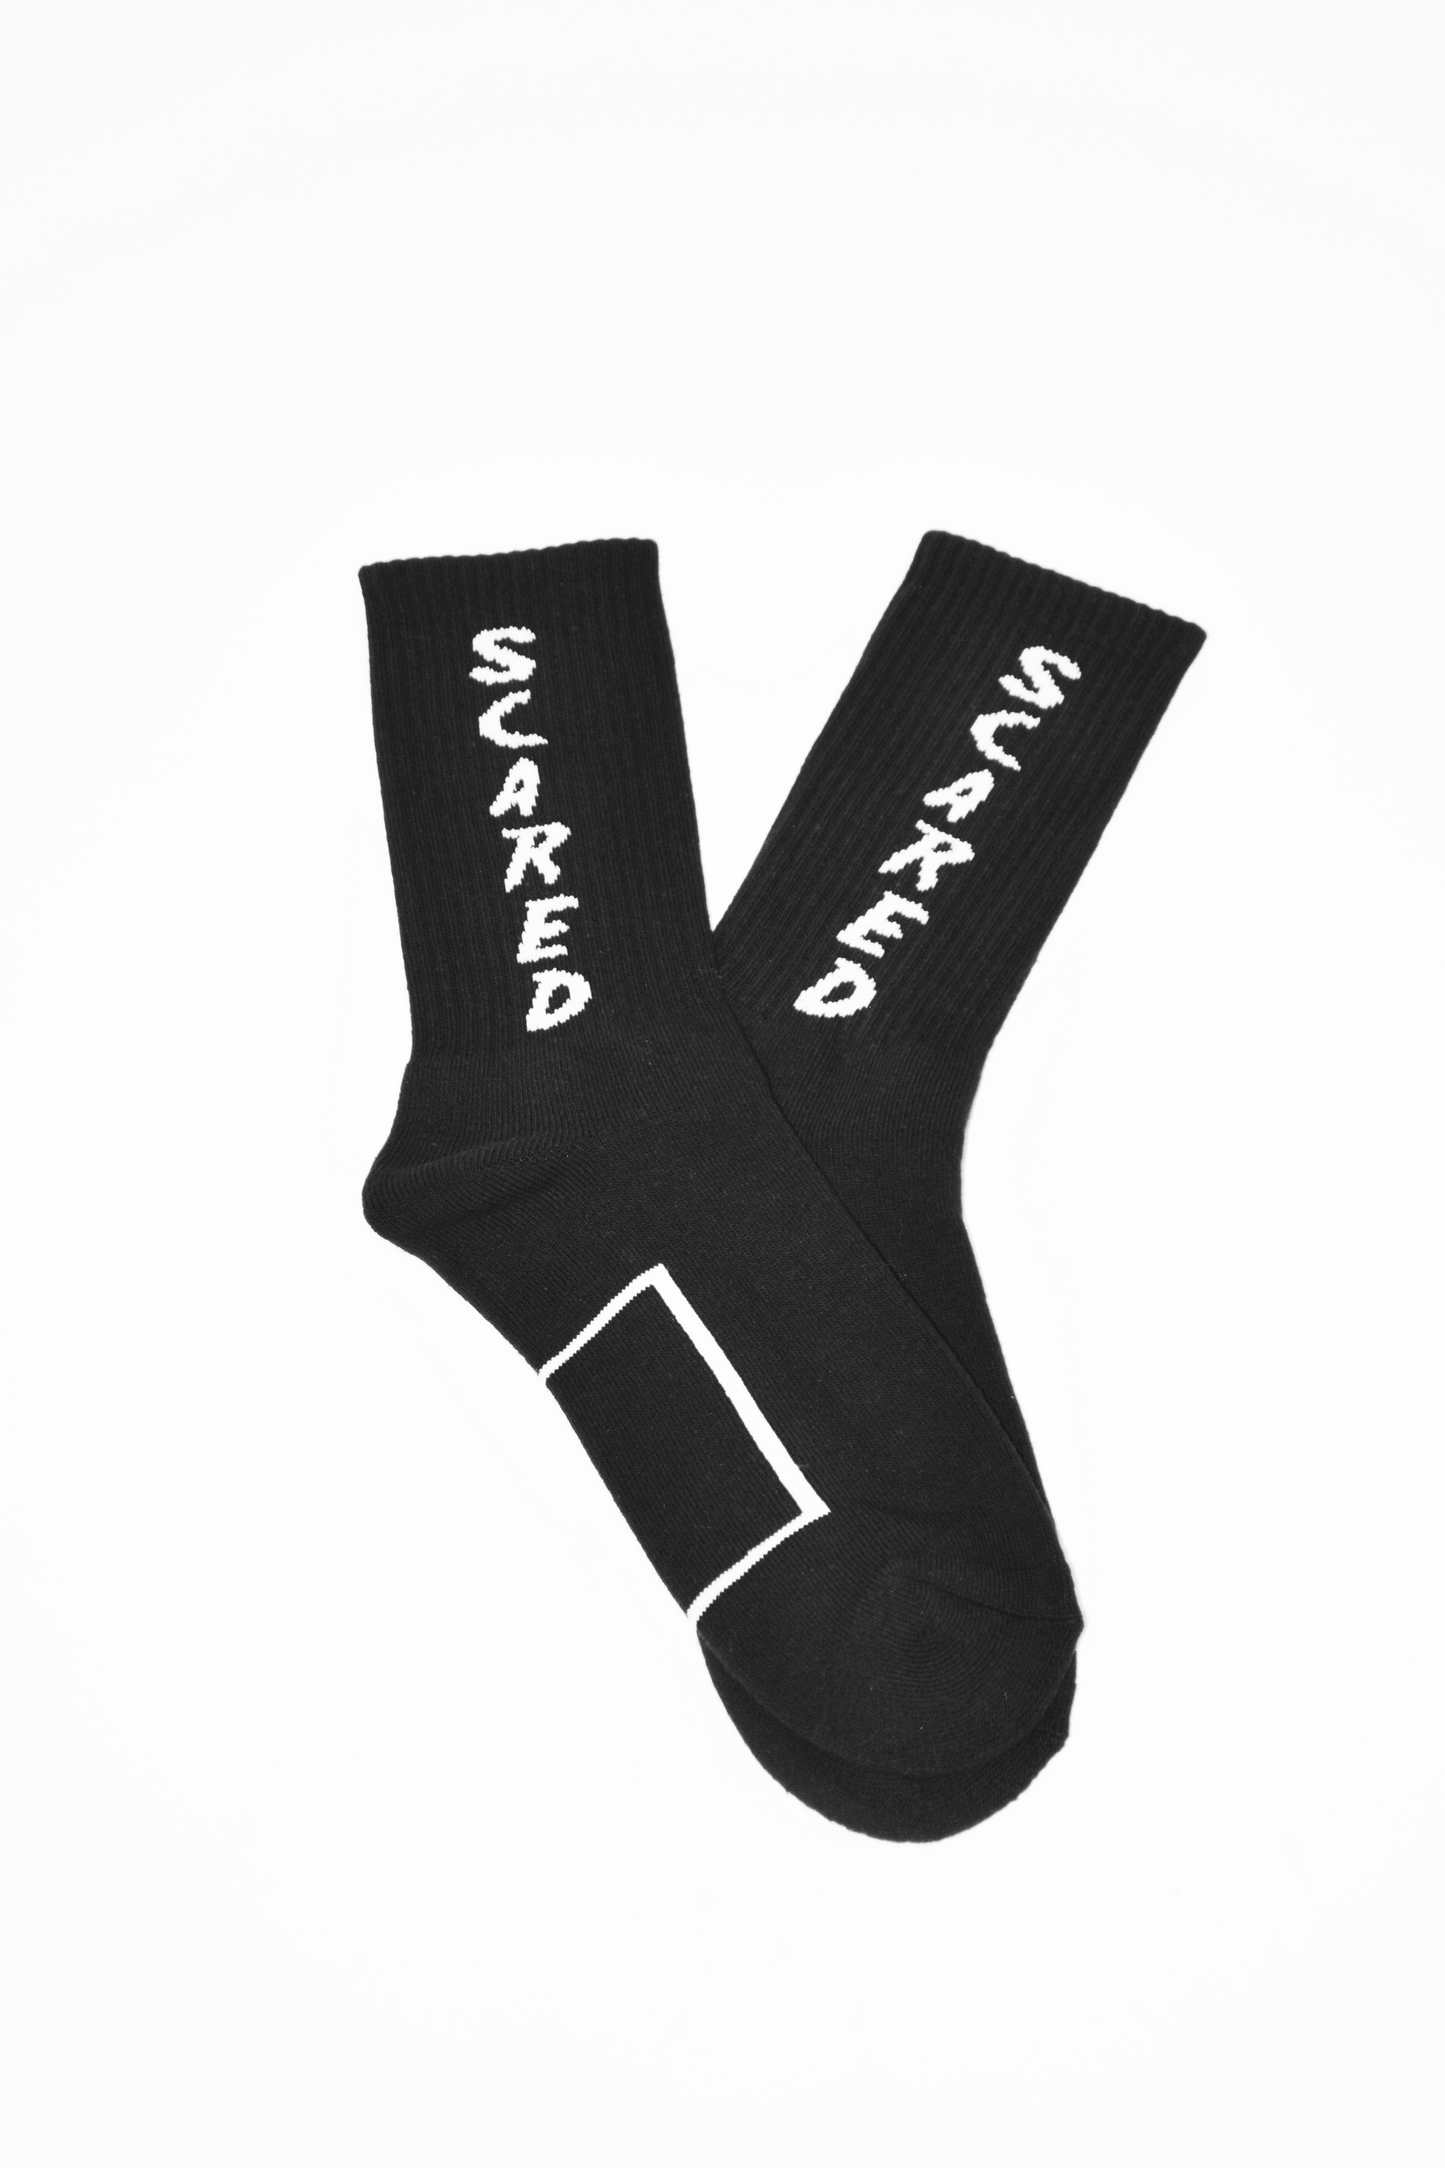 OTB Black Socks